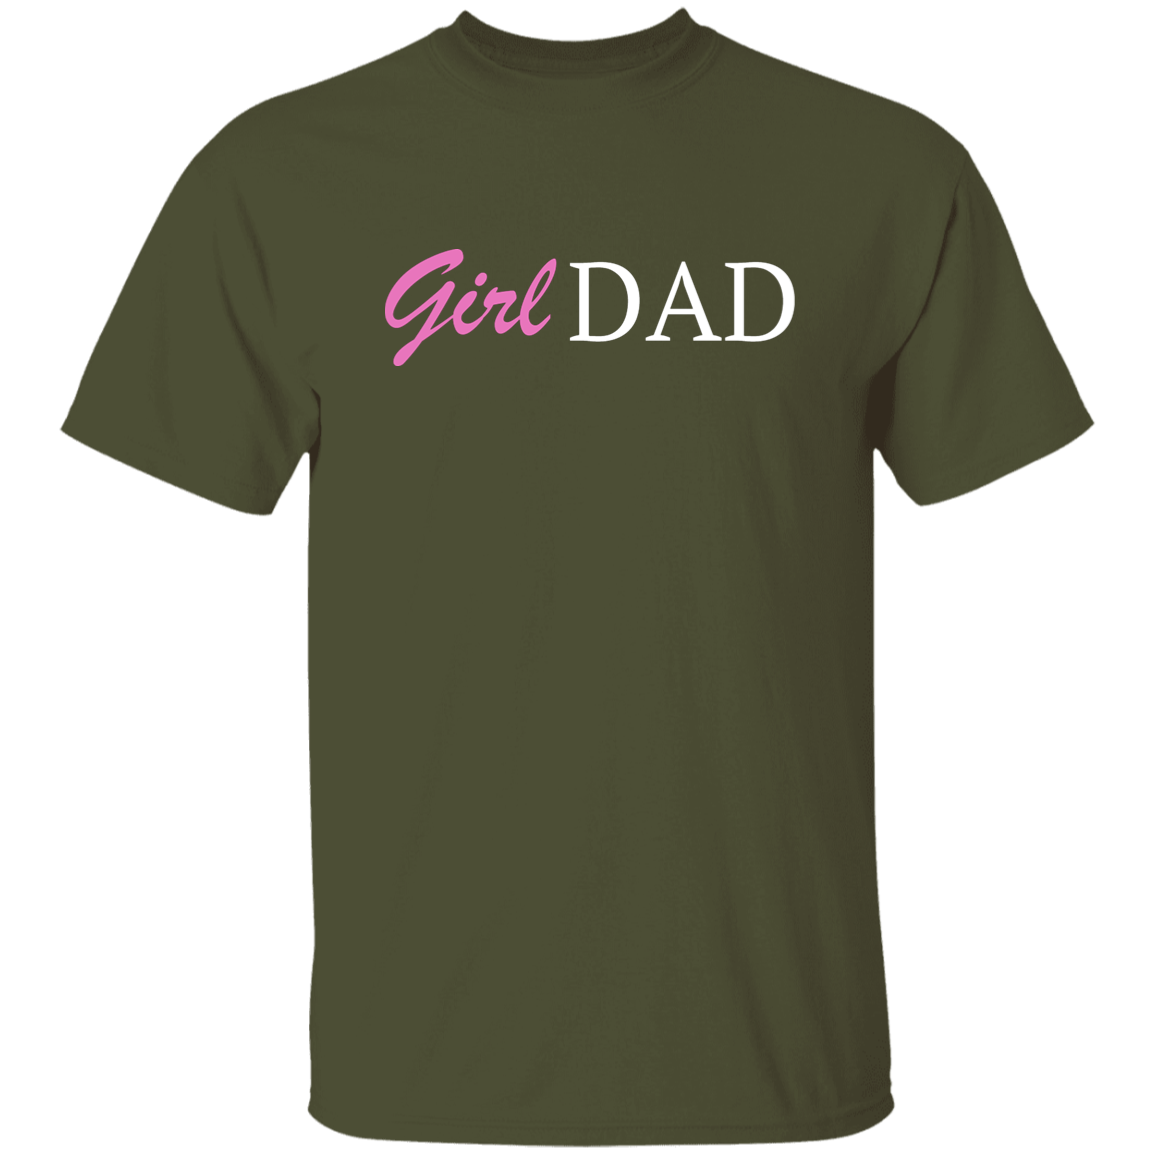 Mens - "Girl Dad" Matching Shirt For Dad